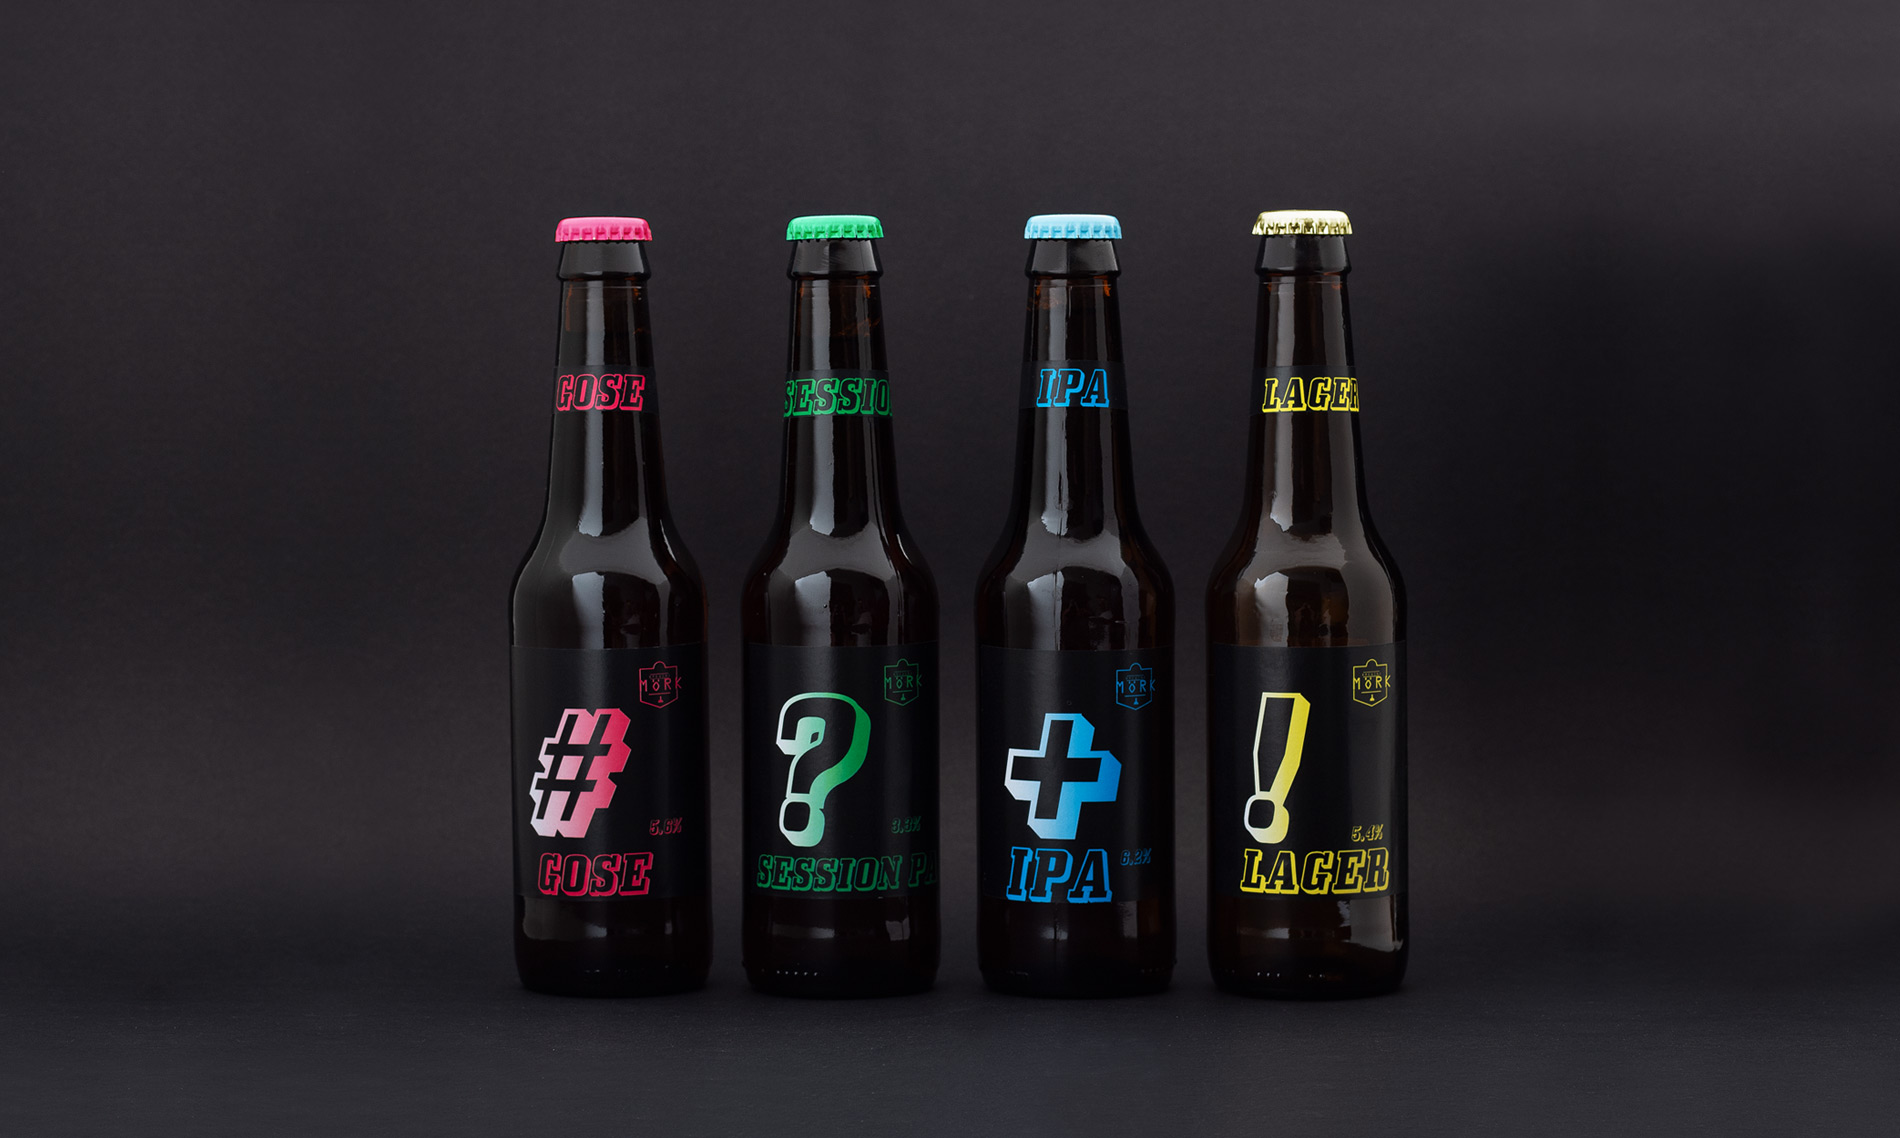 Mörk Craft beers - branding & design by Jaani Vaahtera, Vaahtera & Lönneberga